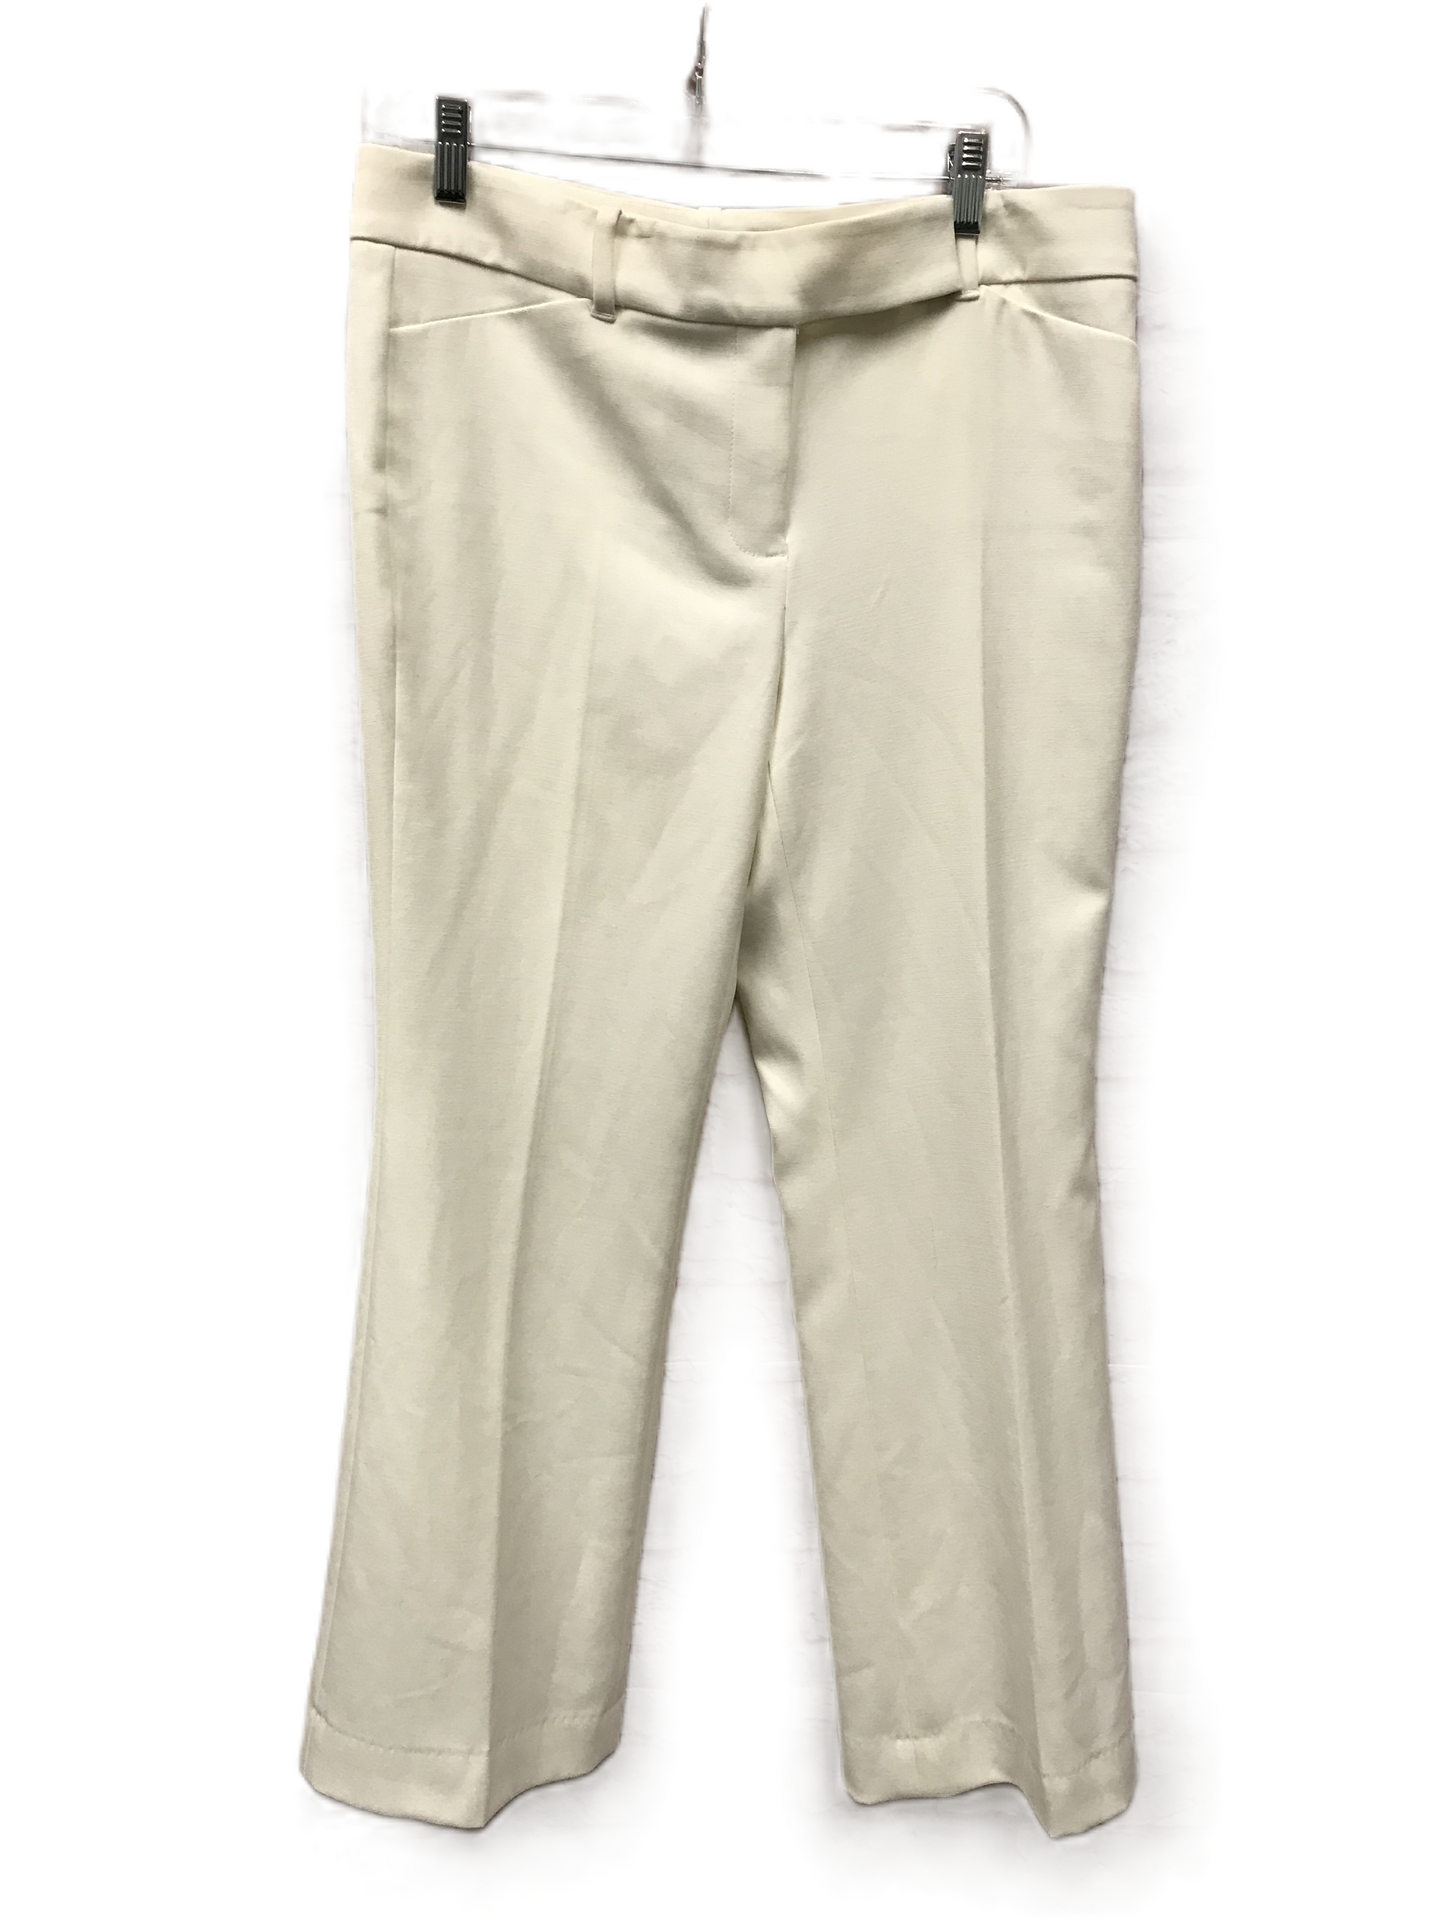 Ivory Pants Dress By White House Black Market, Size: 8